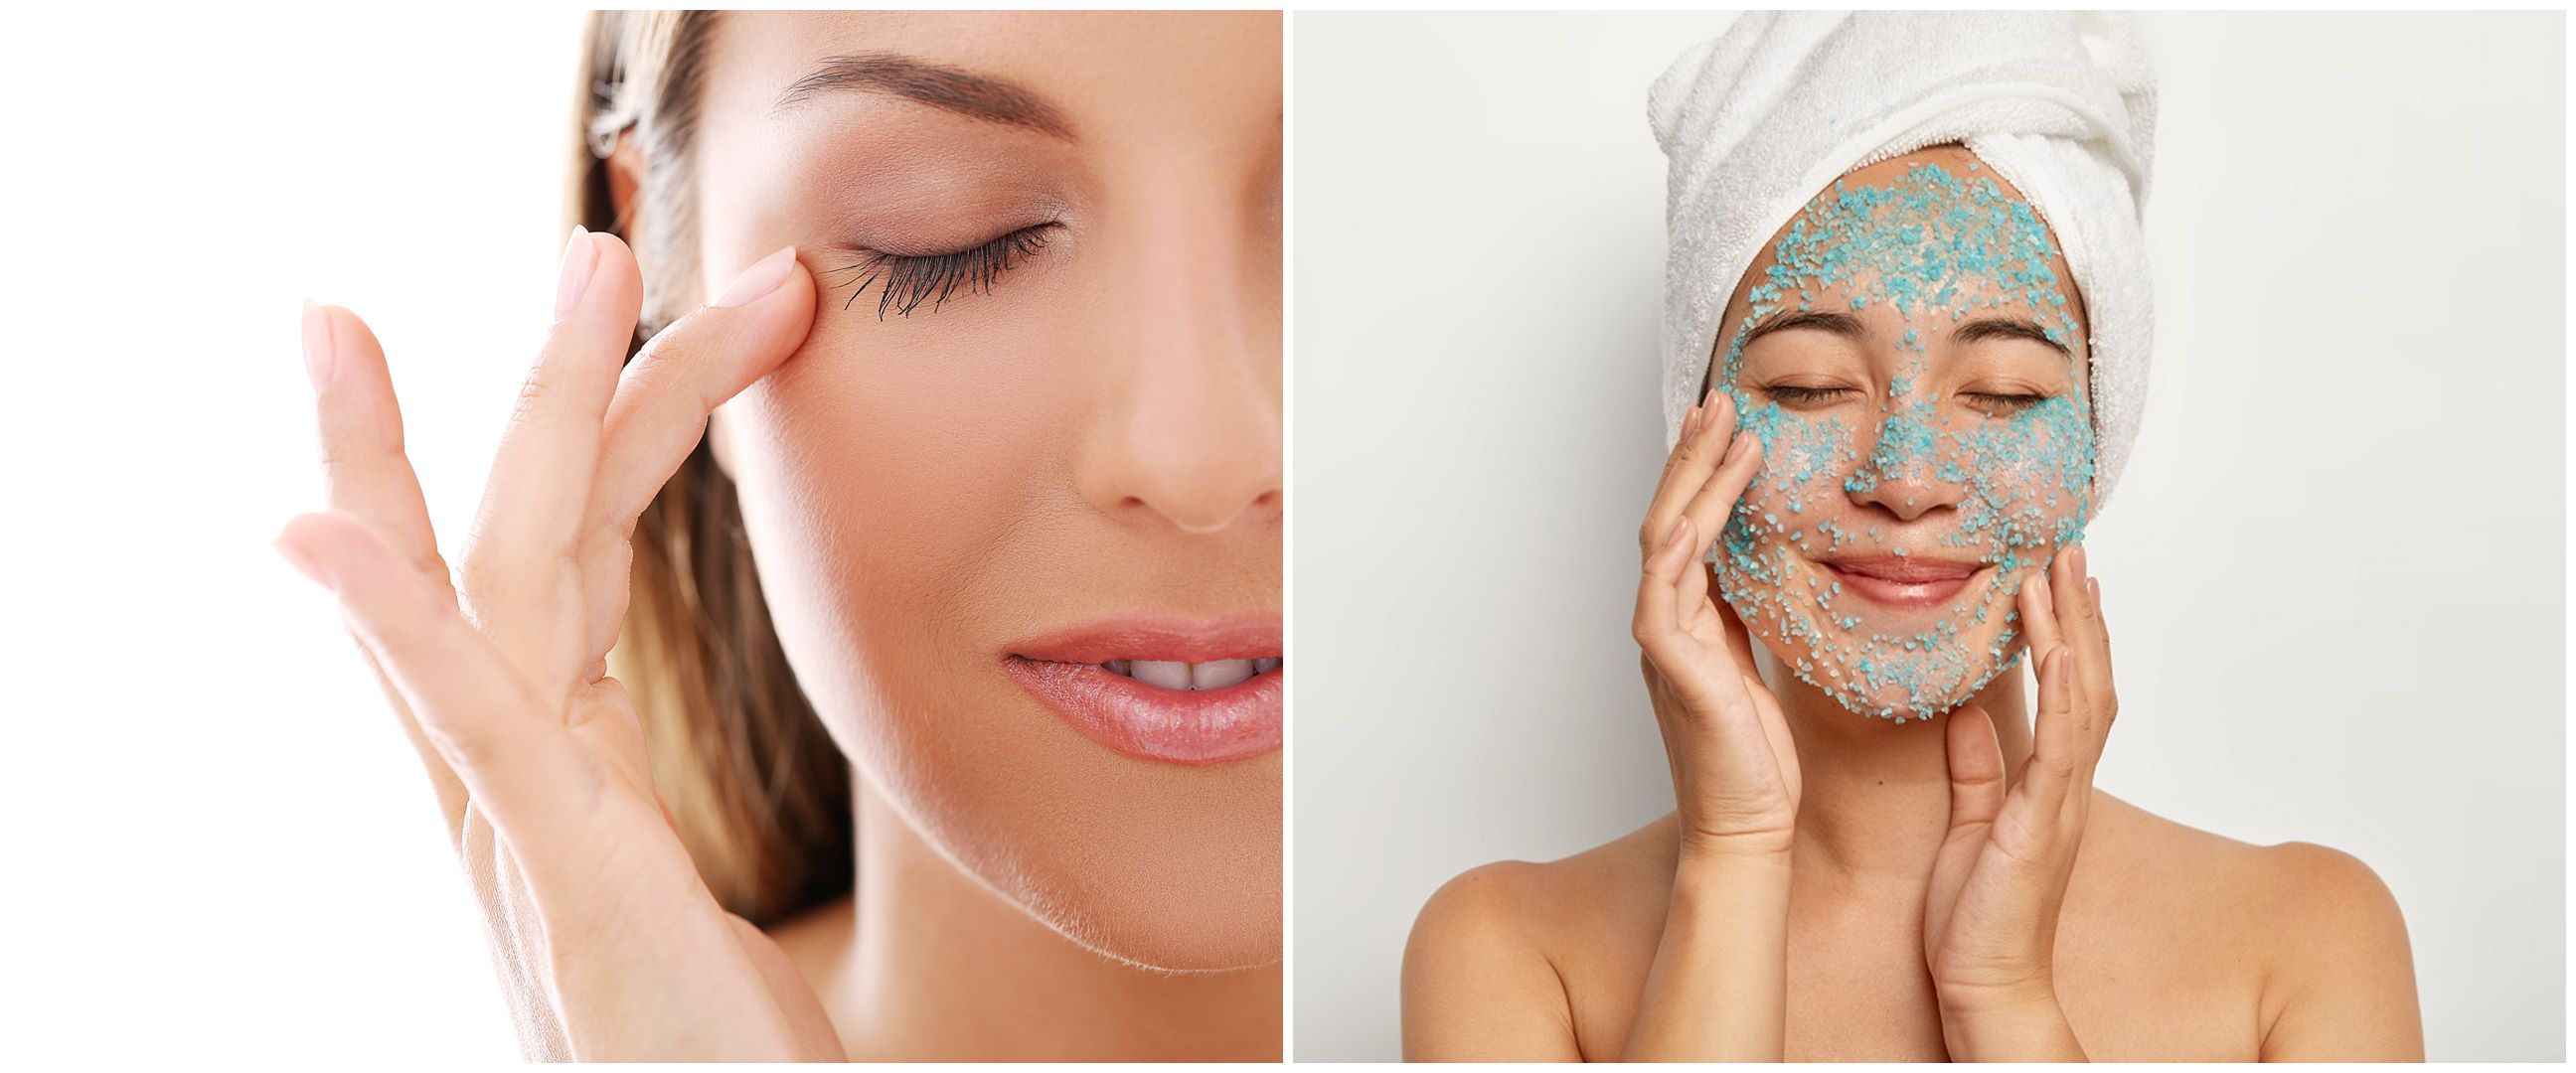 11 Cara merawat kulit wajah kombinasi dengan mudah, rutin pakai masker